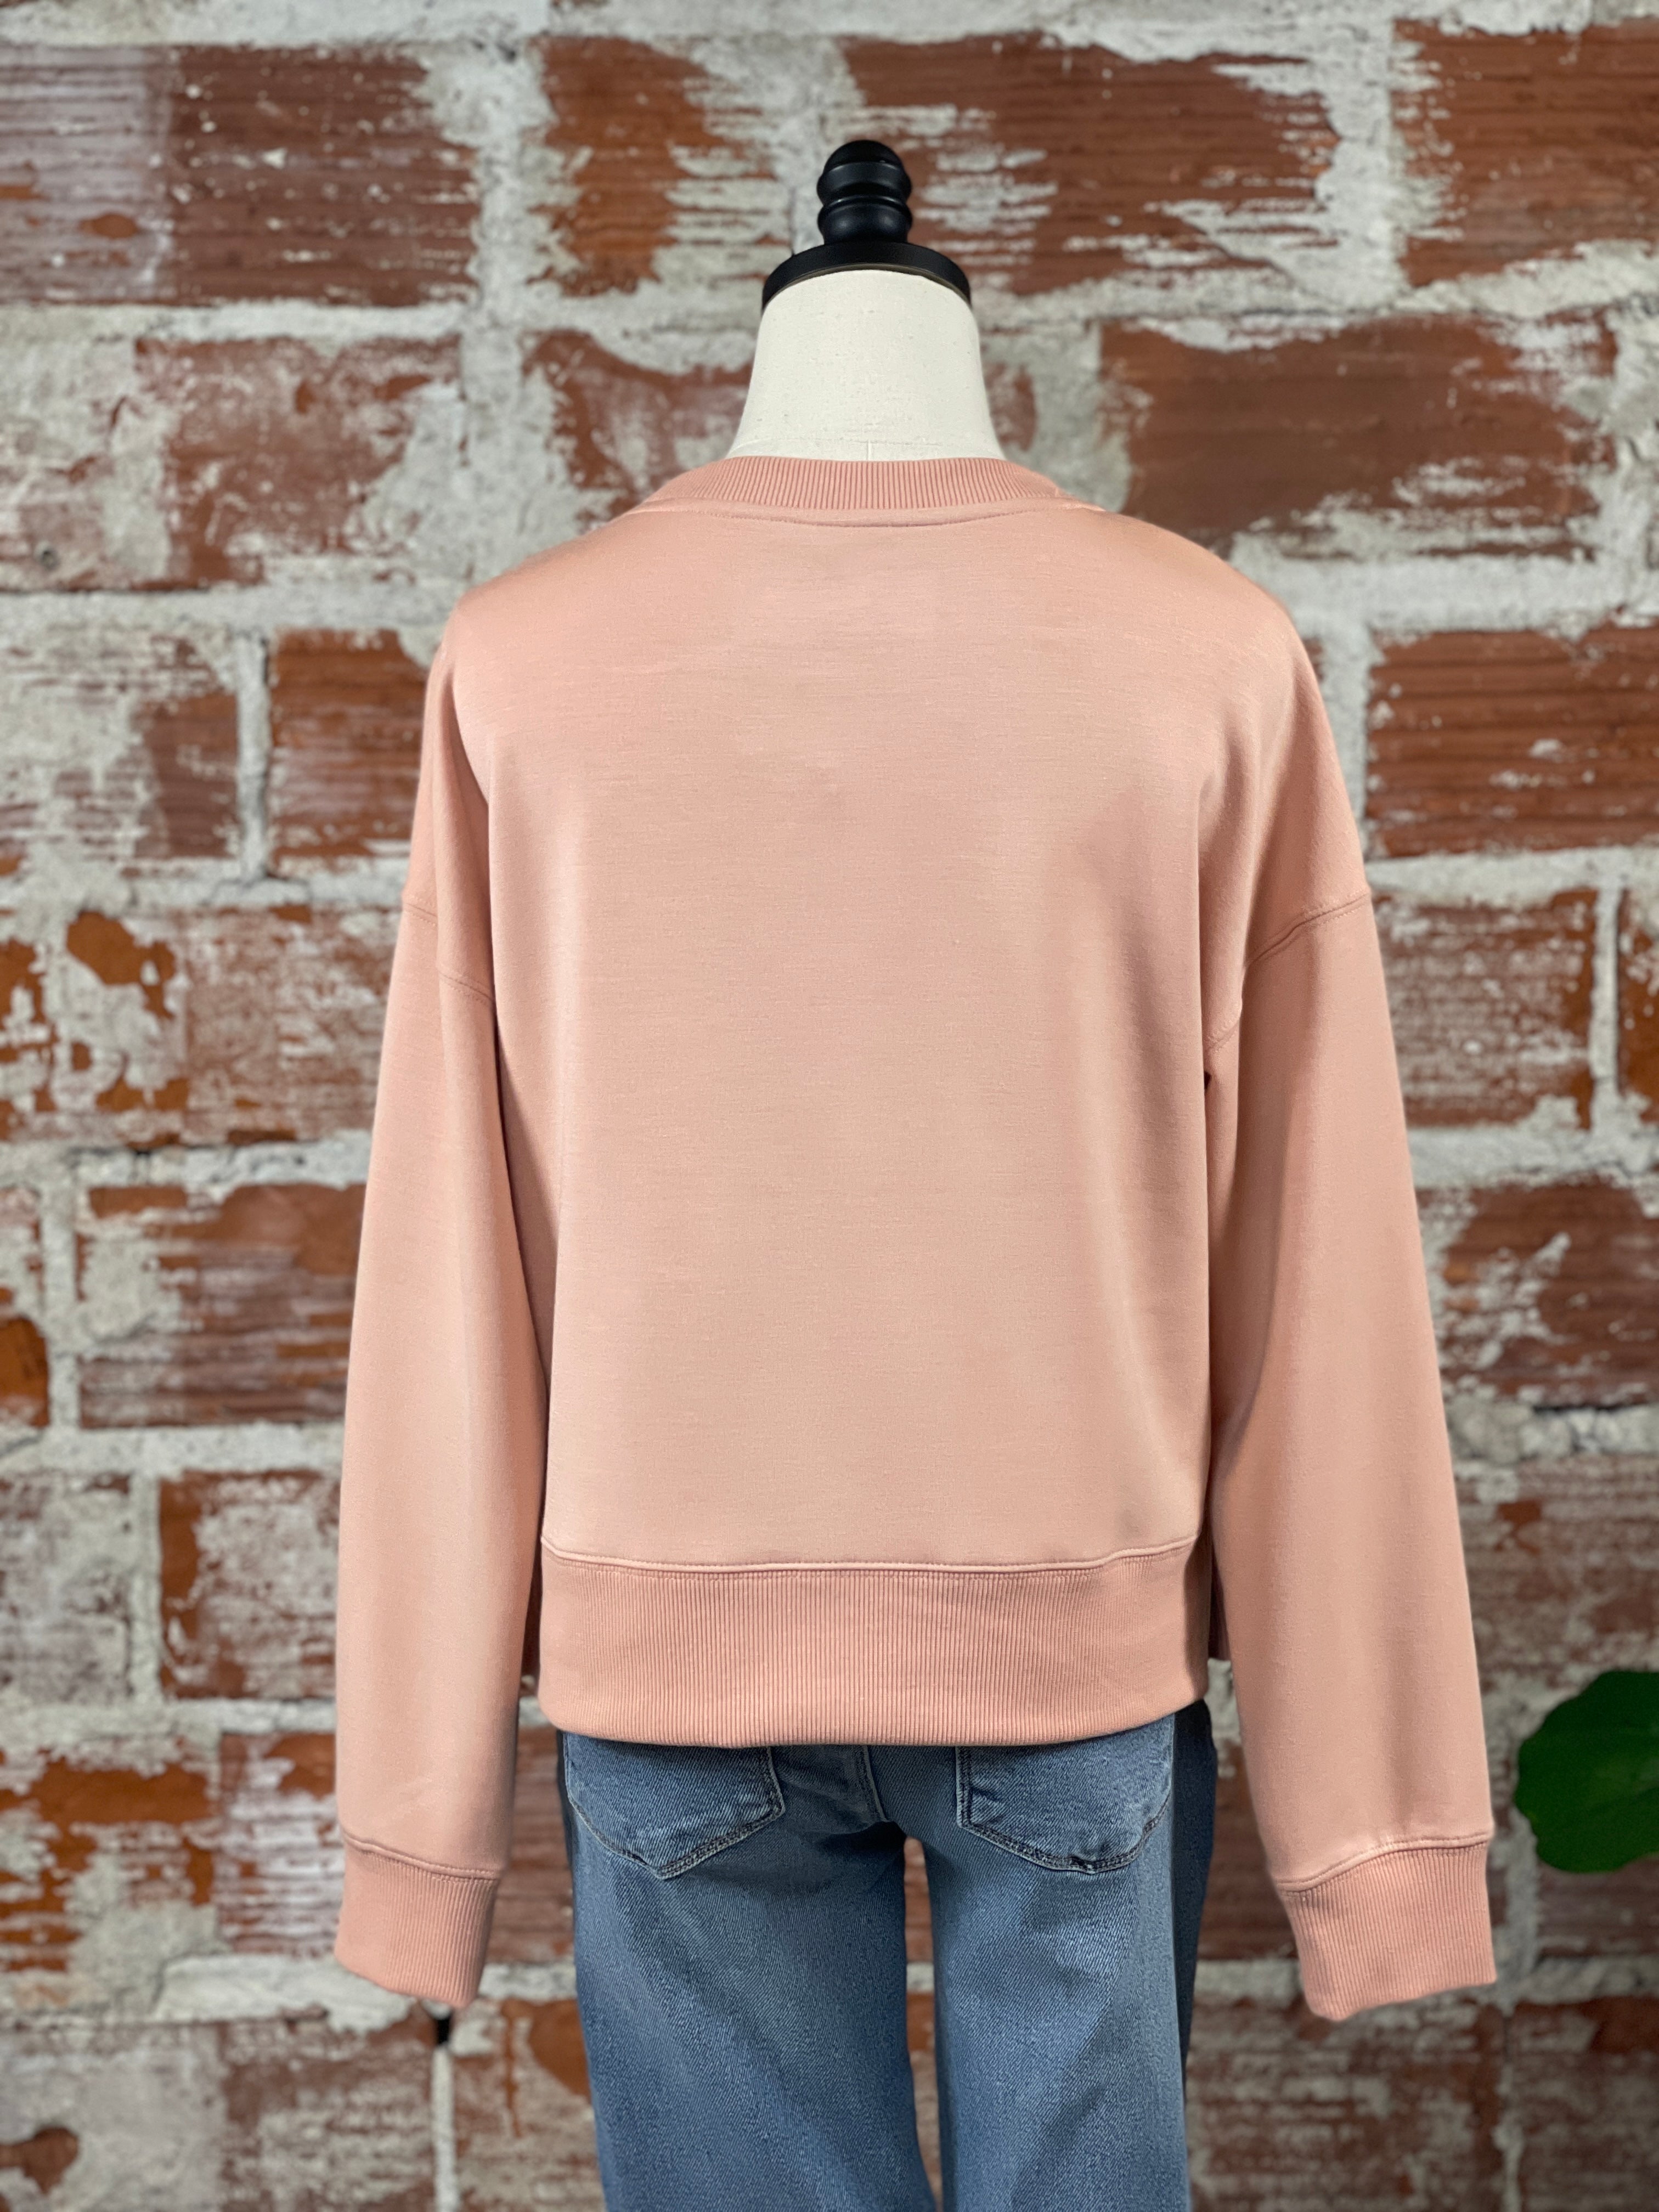 Thread & Supply Christina Top in Dusty Peach-142 Sweatshirts & Hoodies-Little Bird Boutique